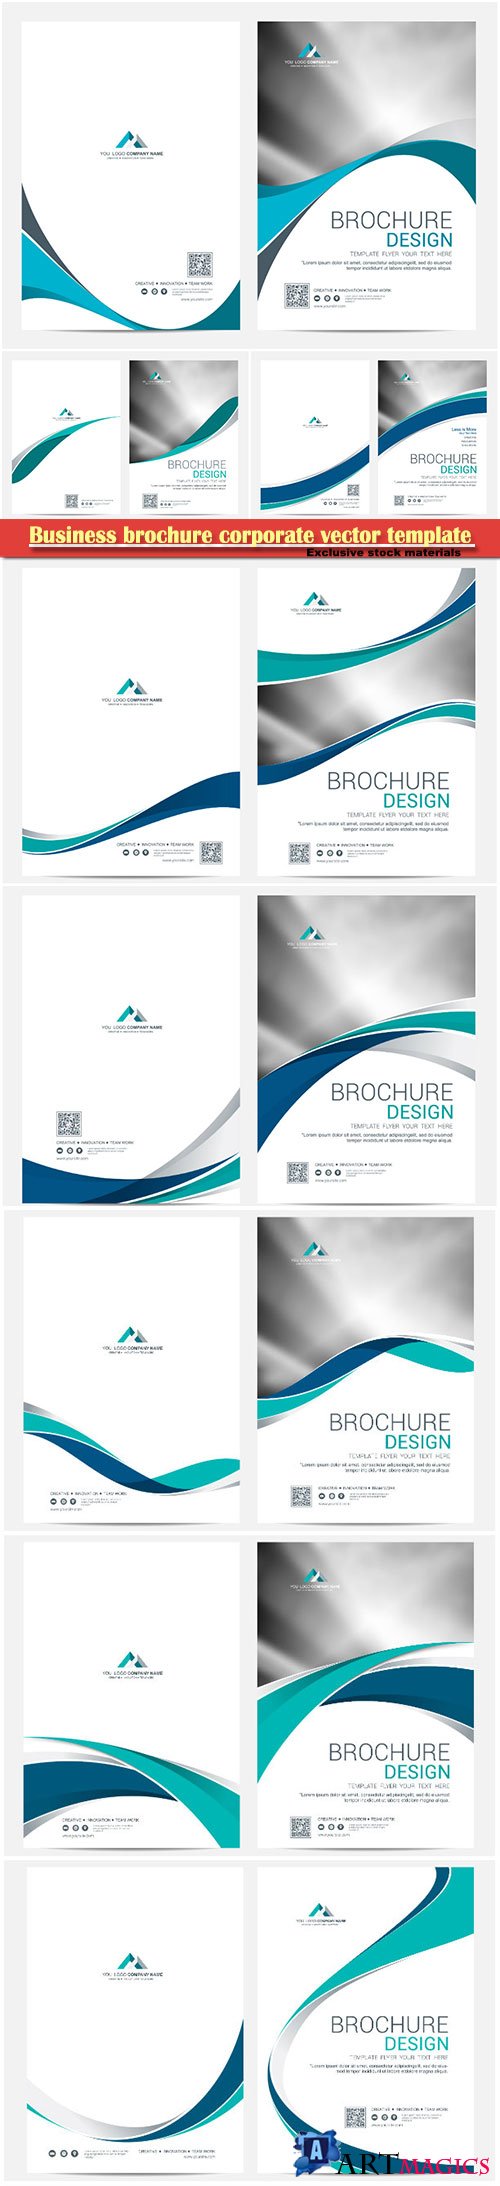 Business brochure corporate vector template, magazine flyer mockup # 26